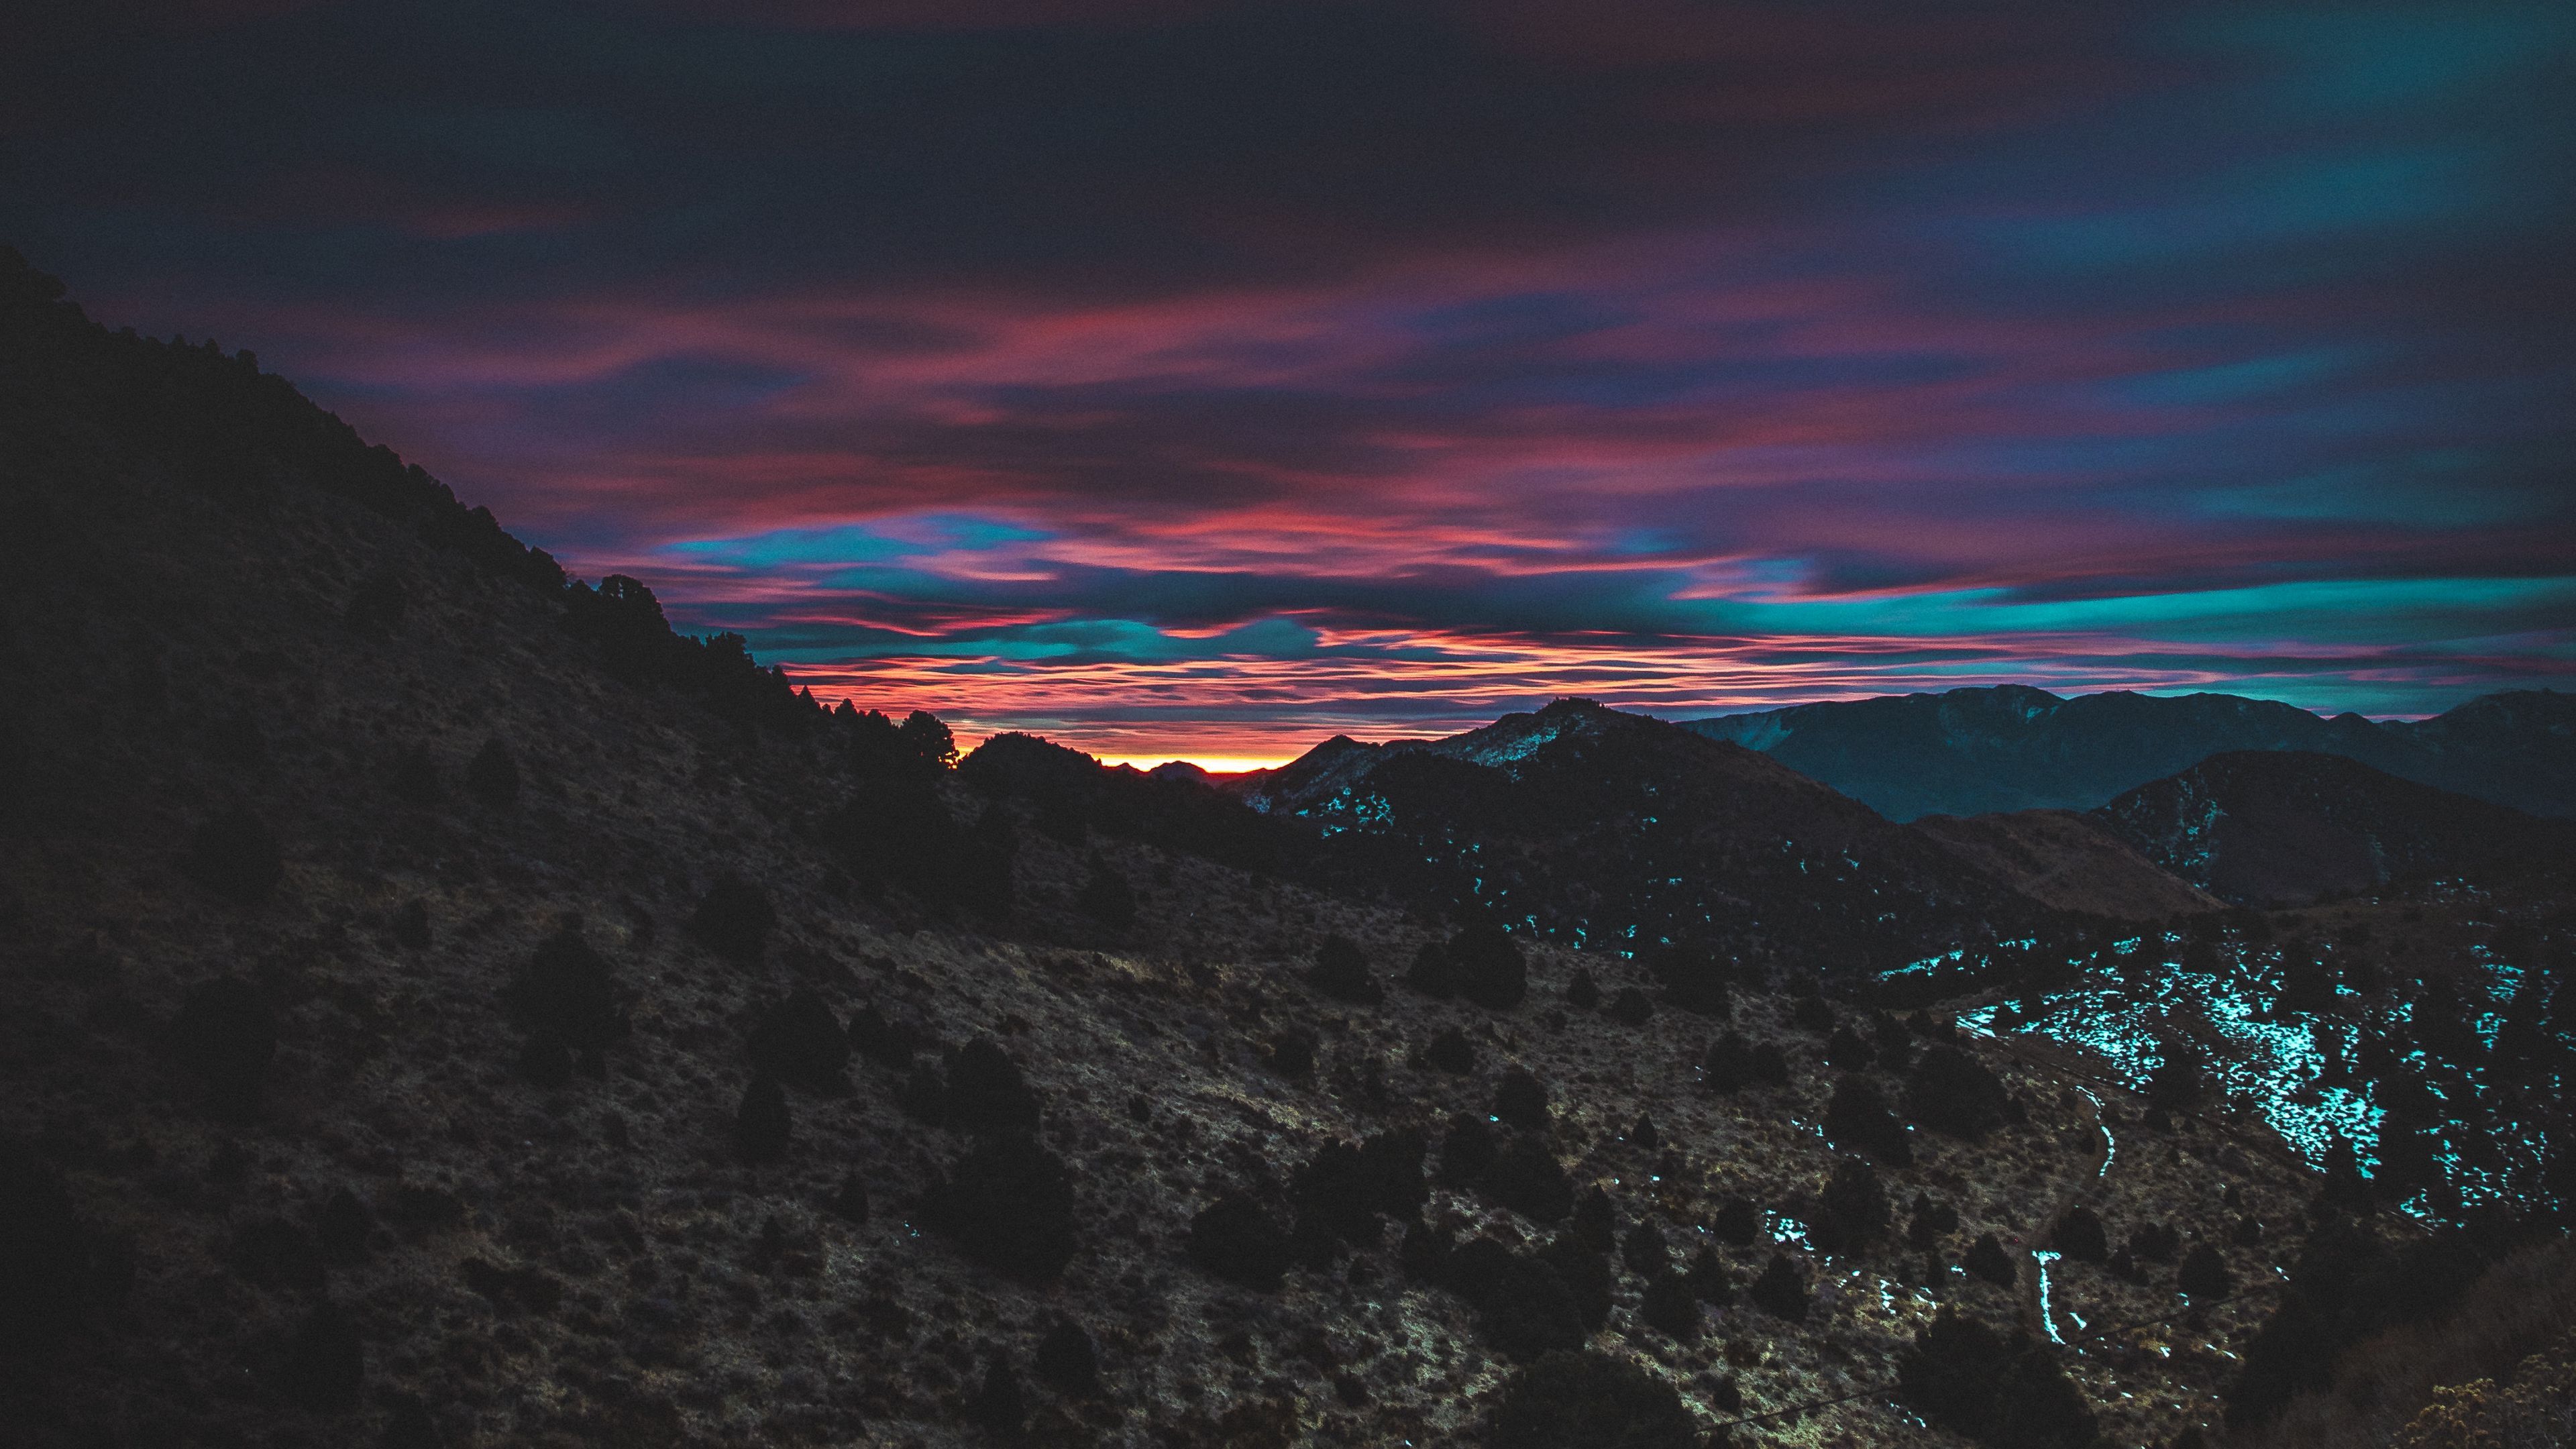 Download wallpaper 3840x2160 mountain, sky, sunset, dark, night 4k uhd 16:9 HD background